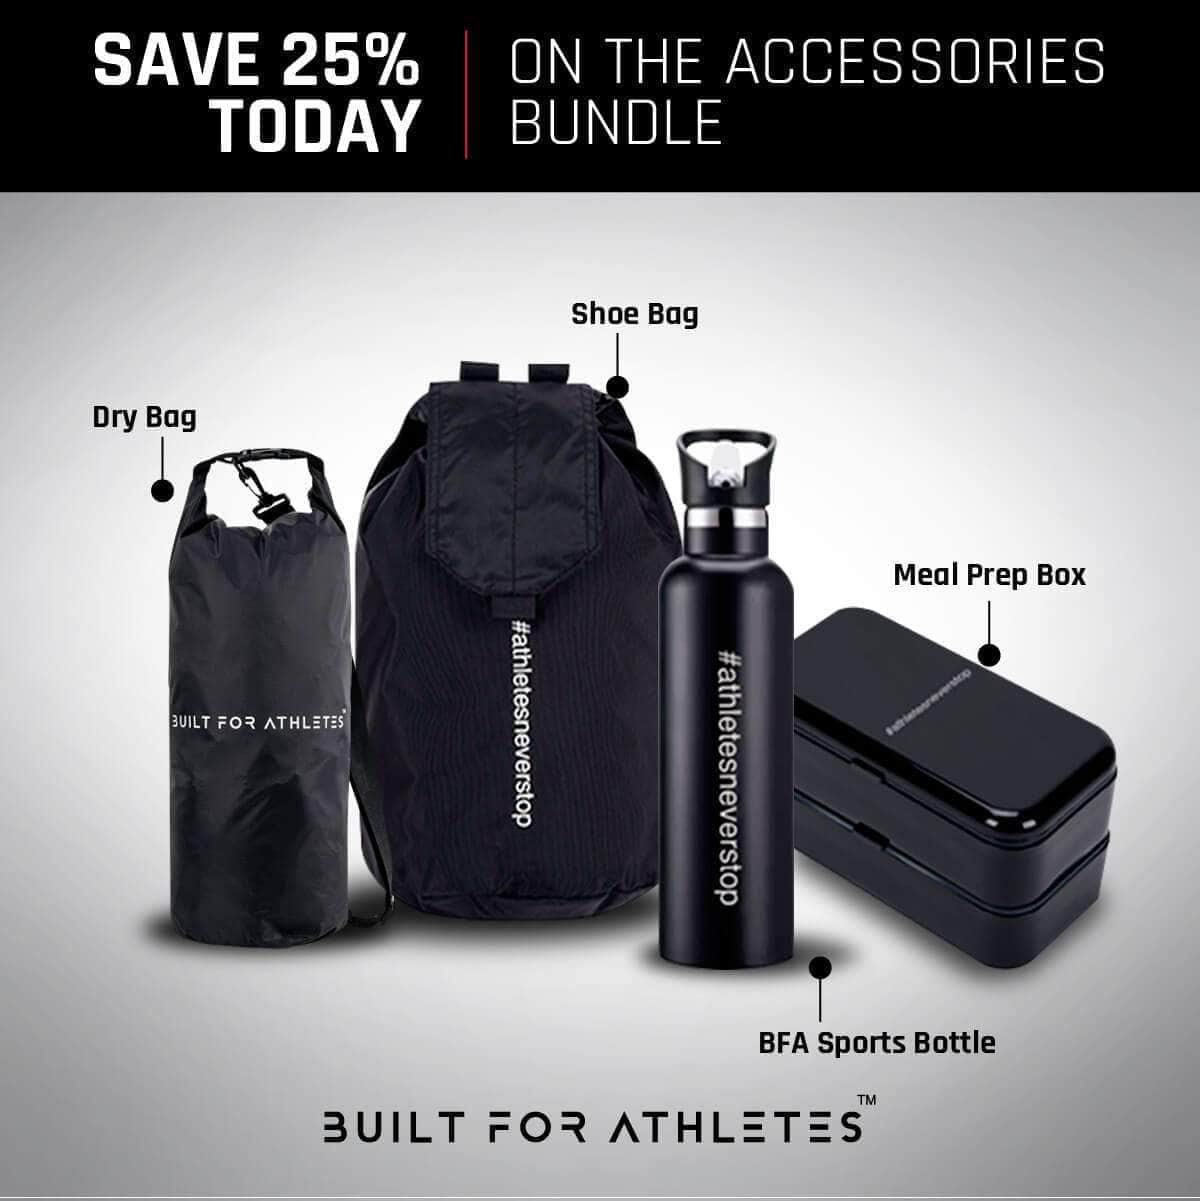 Built for Athletes Accessories Accessories Bundle (Dry Bag + Sports Bottle + Meal Prep Box + Shoe Bag)